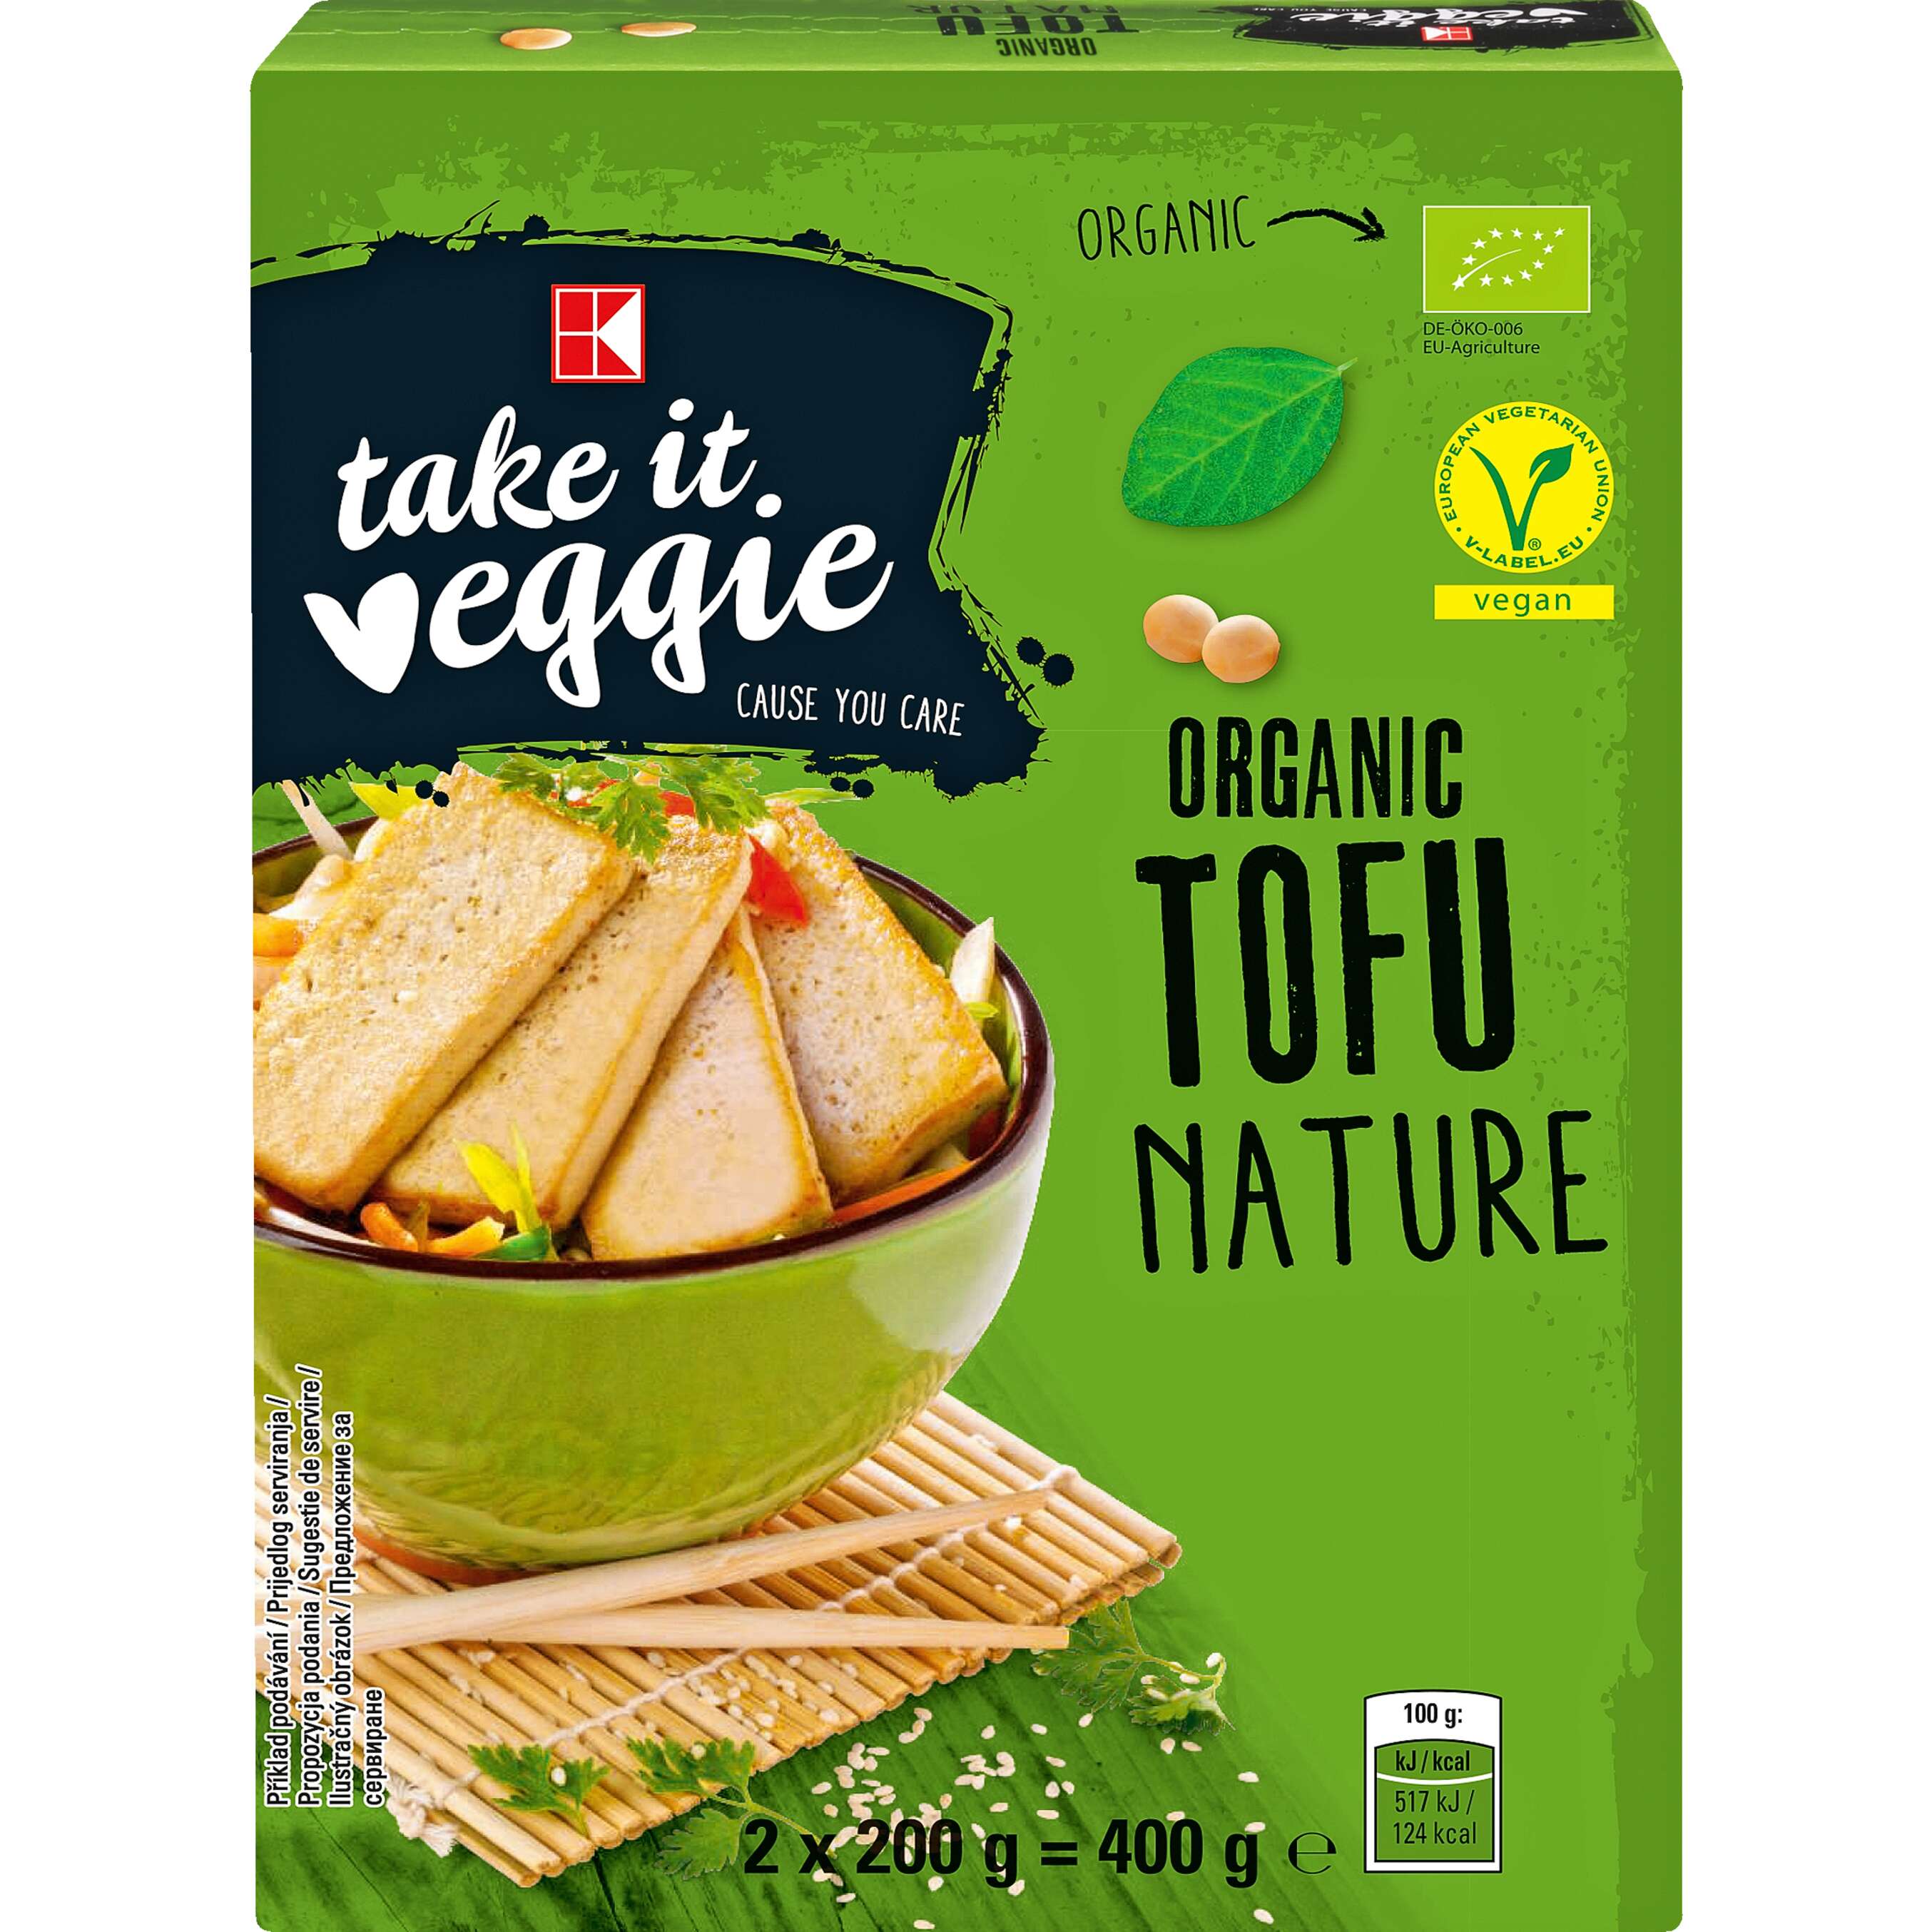 Zobrazit nabídku Take it vegie Bio tofu natur